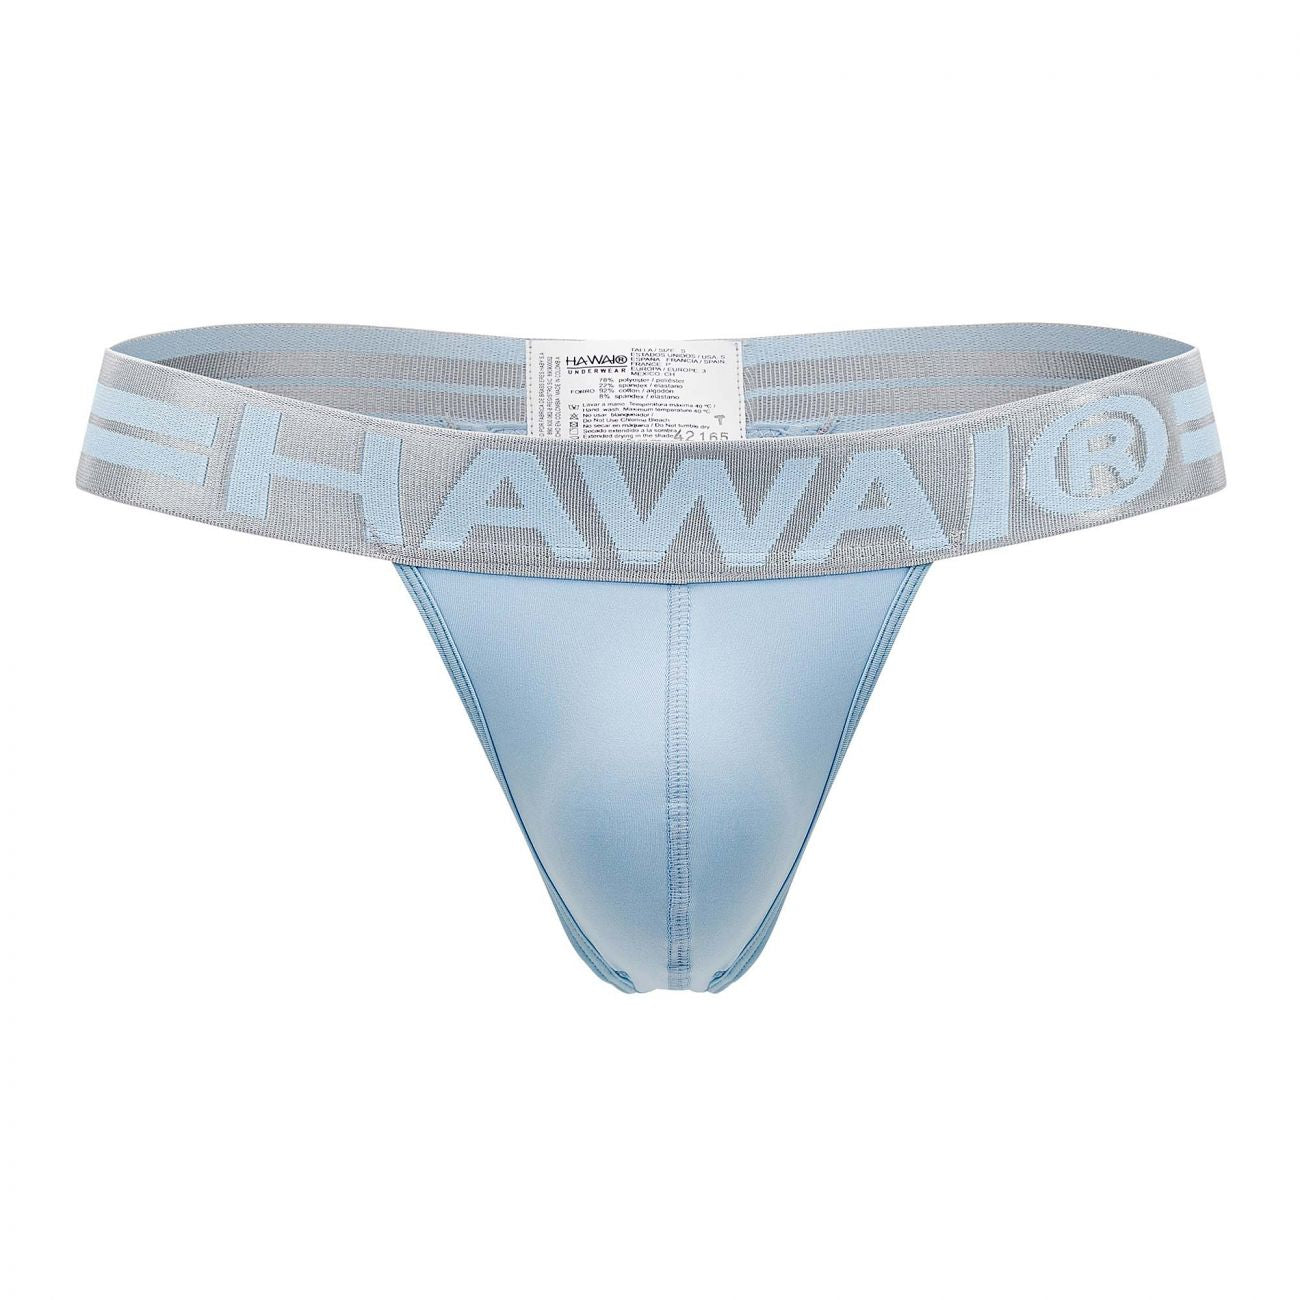 HAWAI 42165 Printed Thongs Light Blue